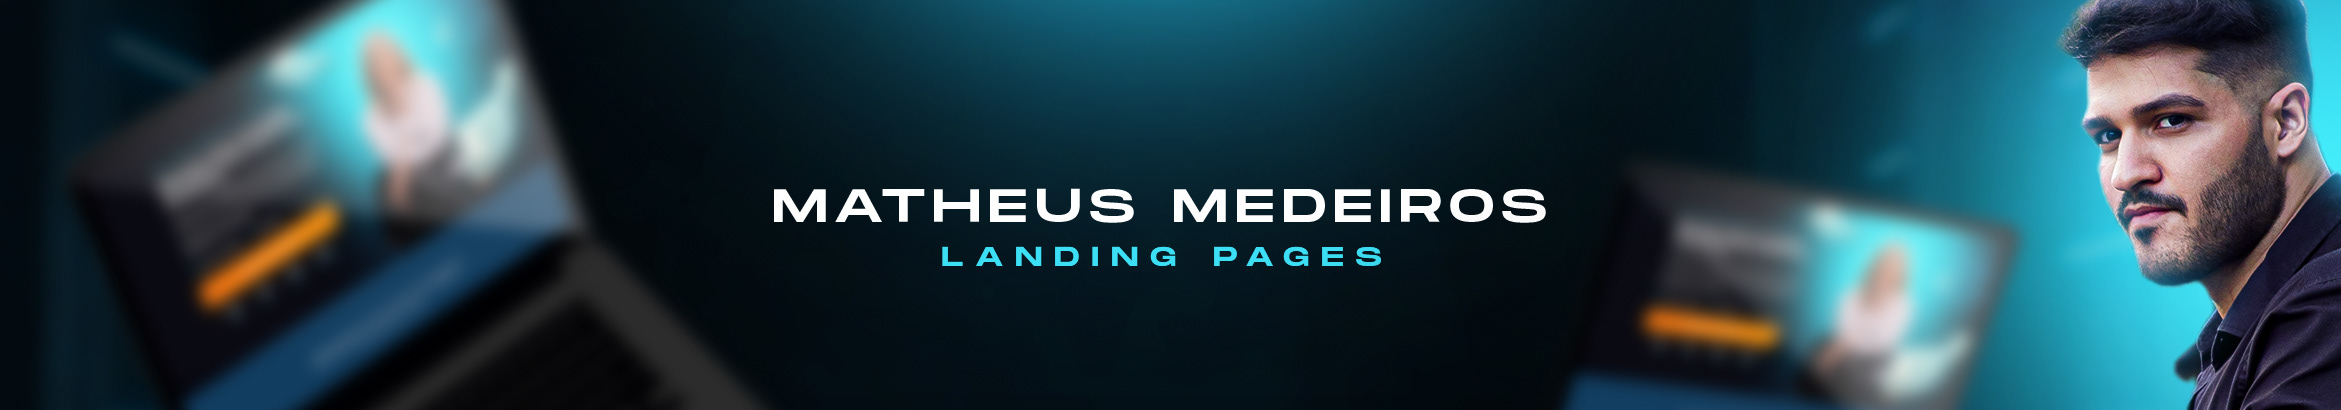 Matheus Medeiros's profile banner